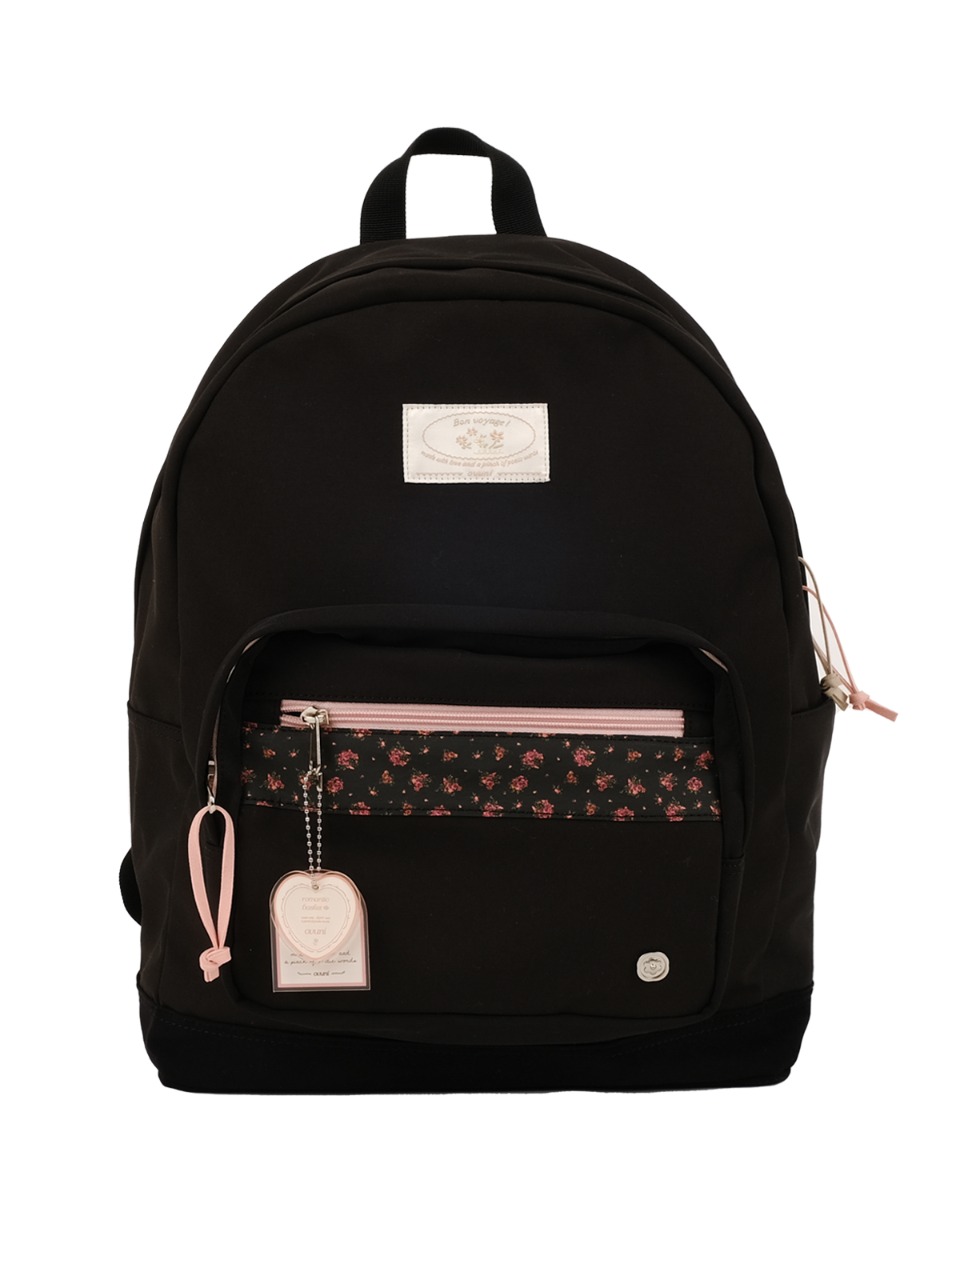 Bon voyage backpack - black - ovuni